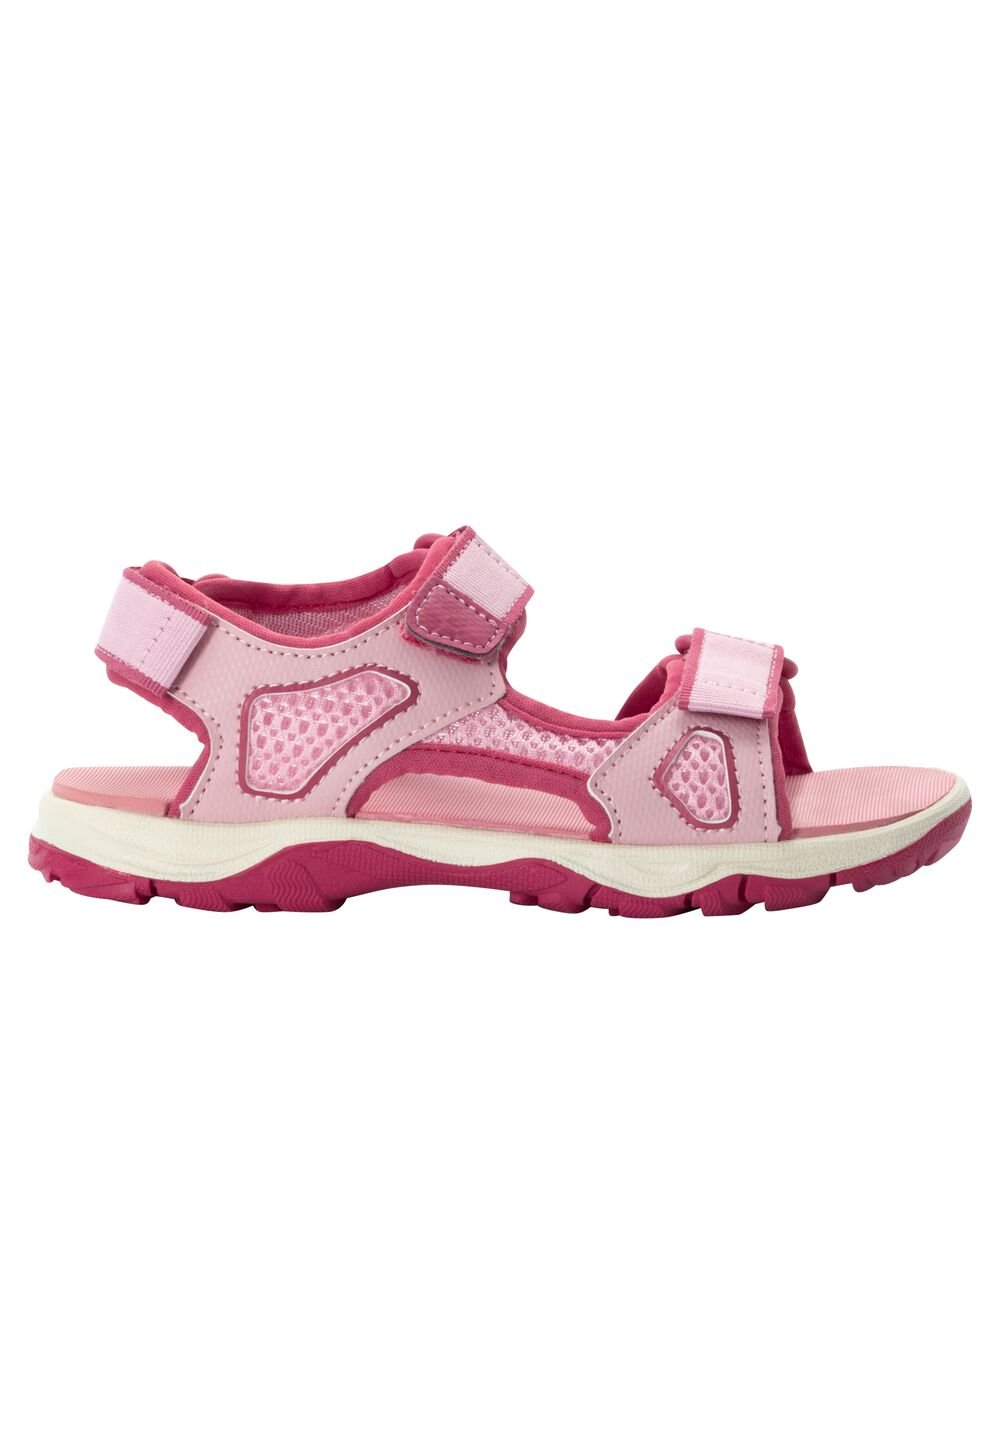 Jack Wolfskin Taraco Beach Sandal Kids Kinderen sandalen 26 soft pink soft pink